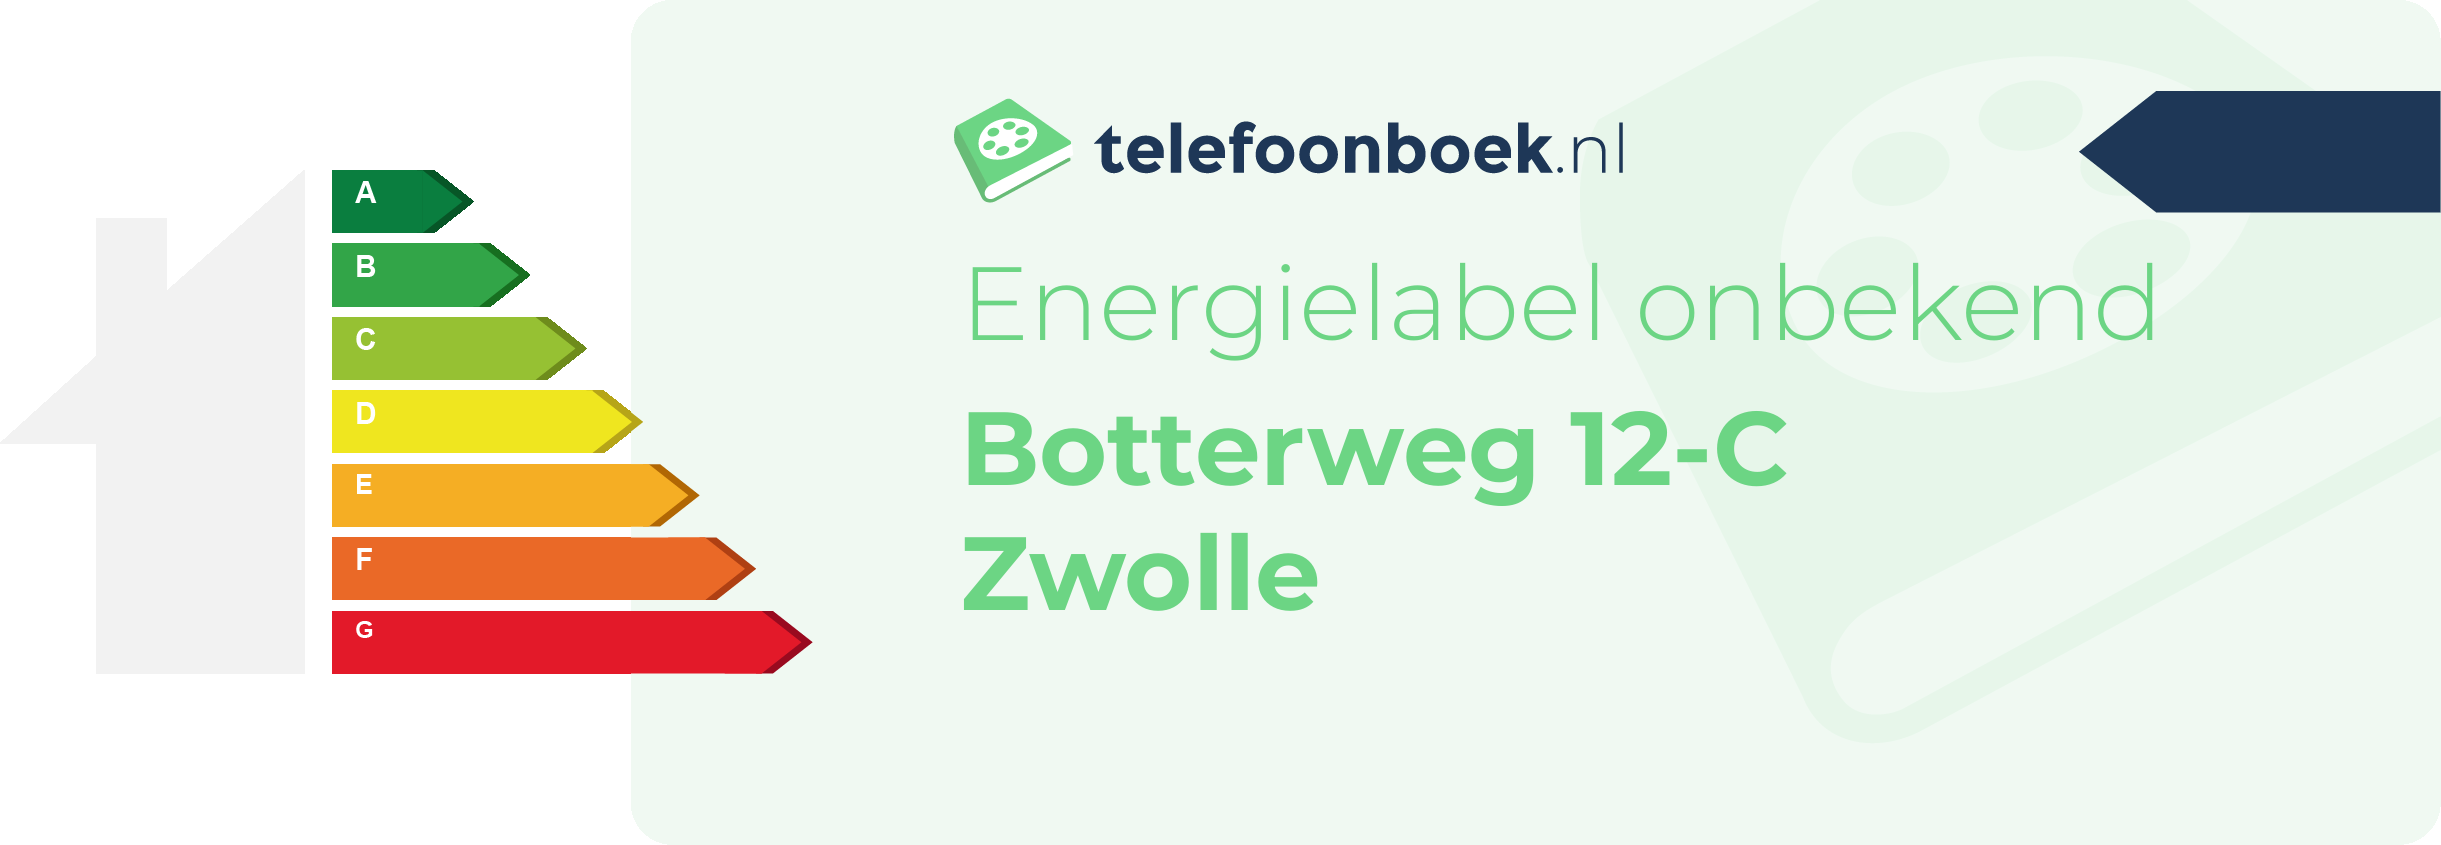 Energielabel Botterweg 12-C Zwolle